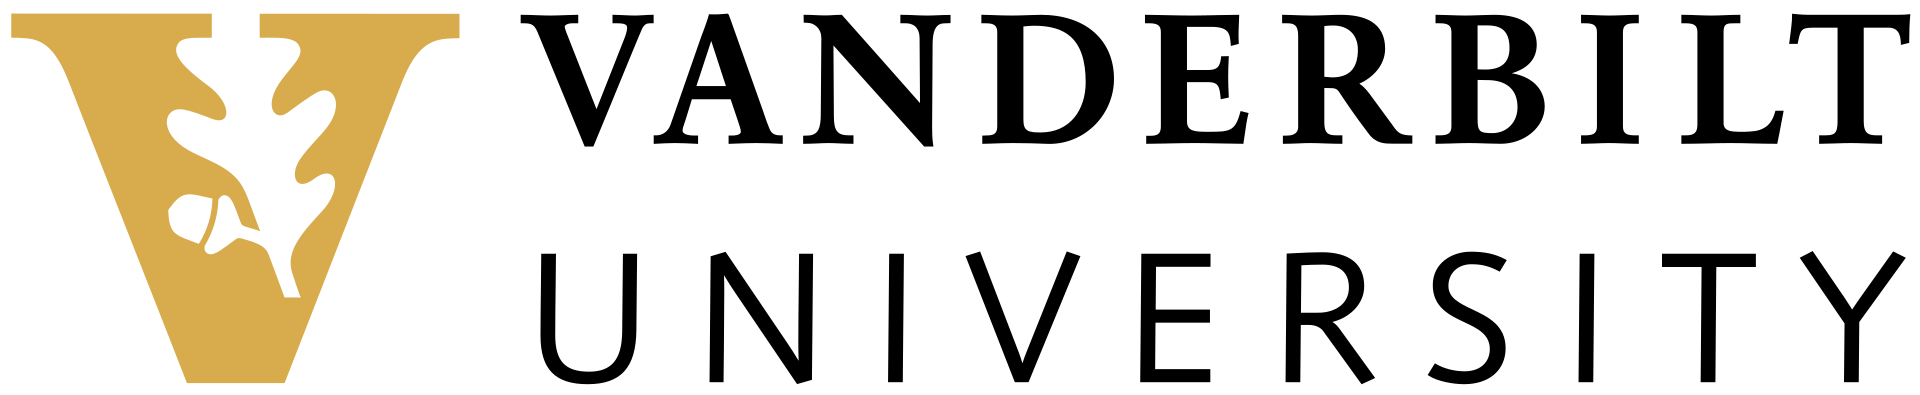 Vanderbilt University logo, By Source, Fair use, https://en.wikipedia.org/w/index.php?curid=13301785"